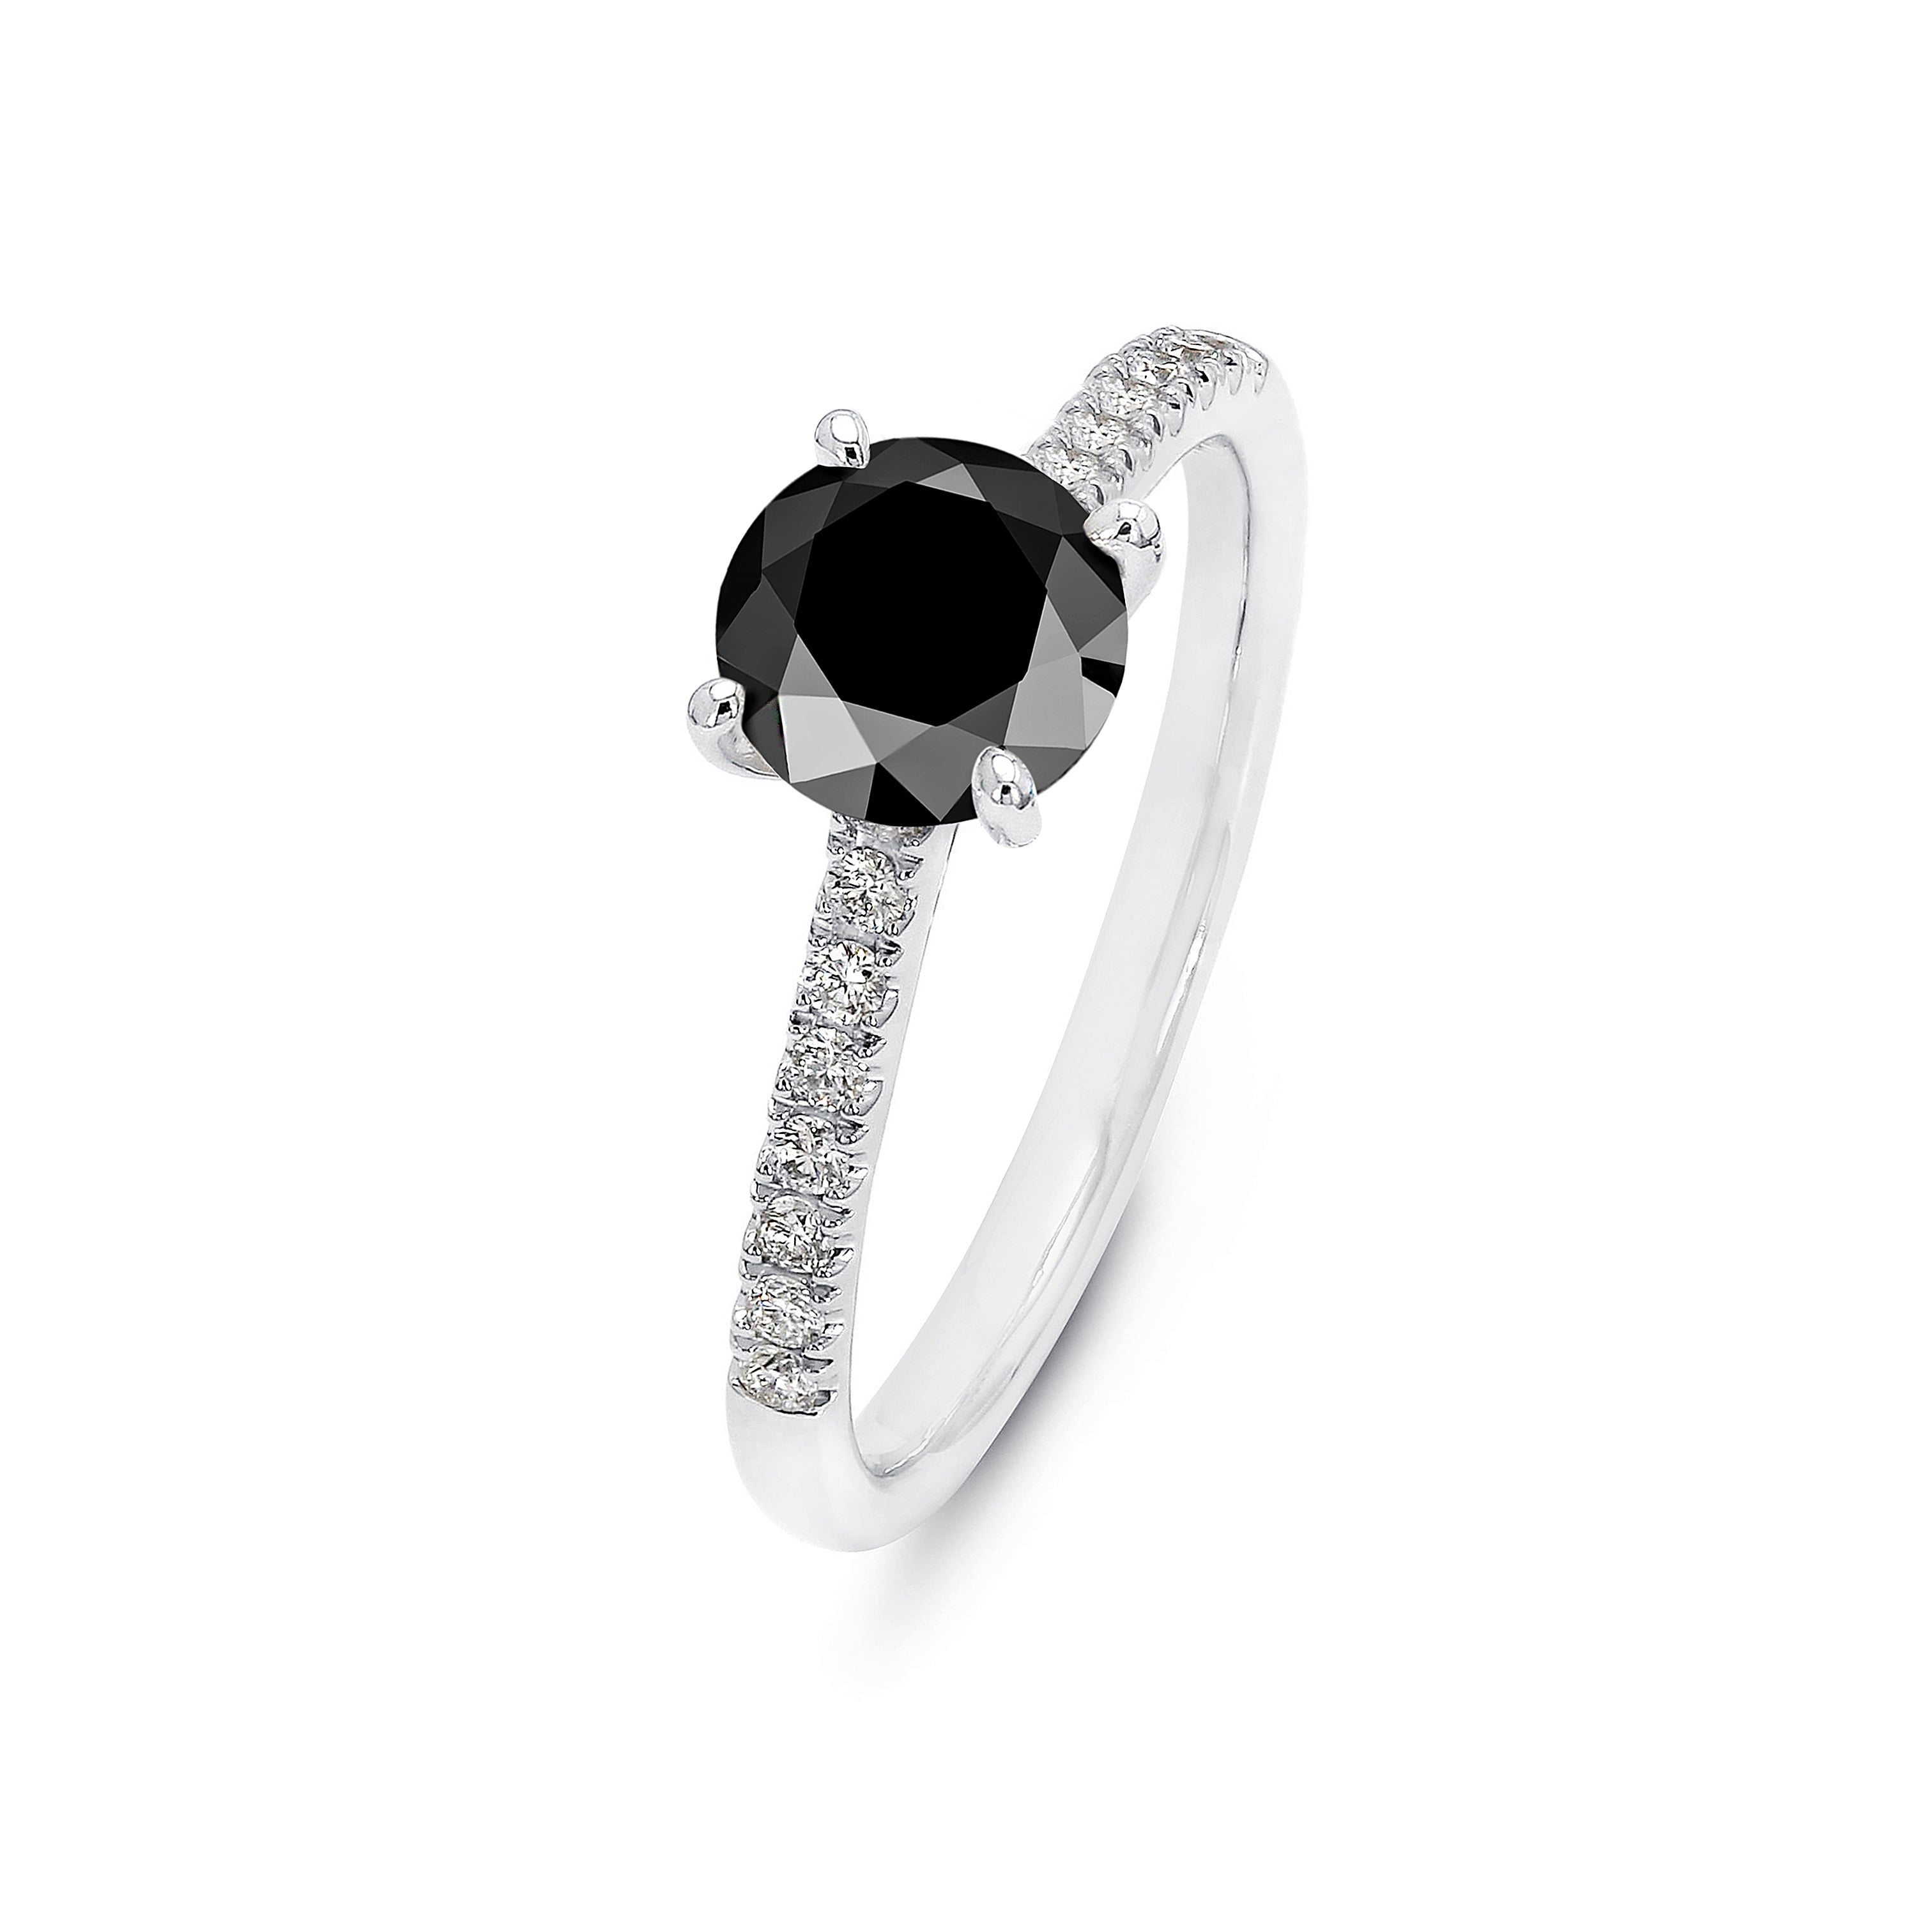 Shimansky - Black Diamond Microset Ring 1.40ct crafted in 18K White Gold